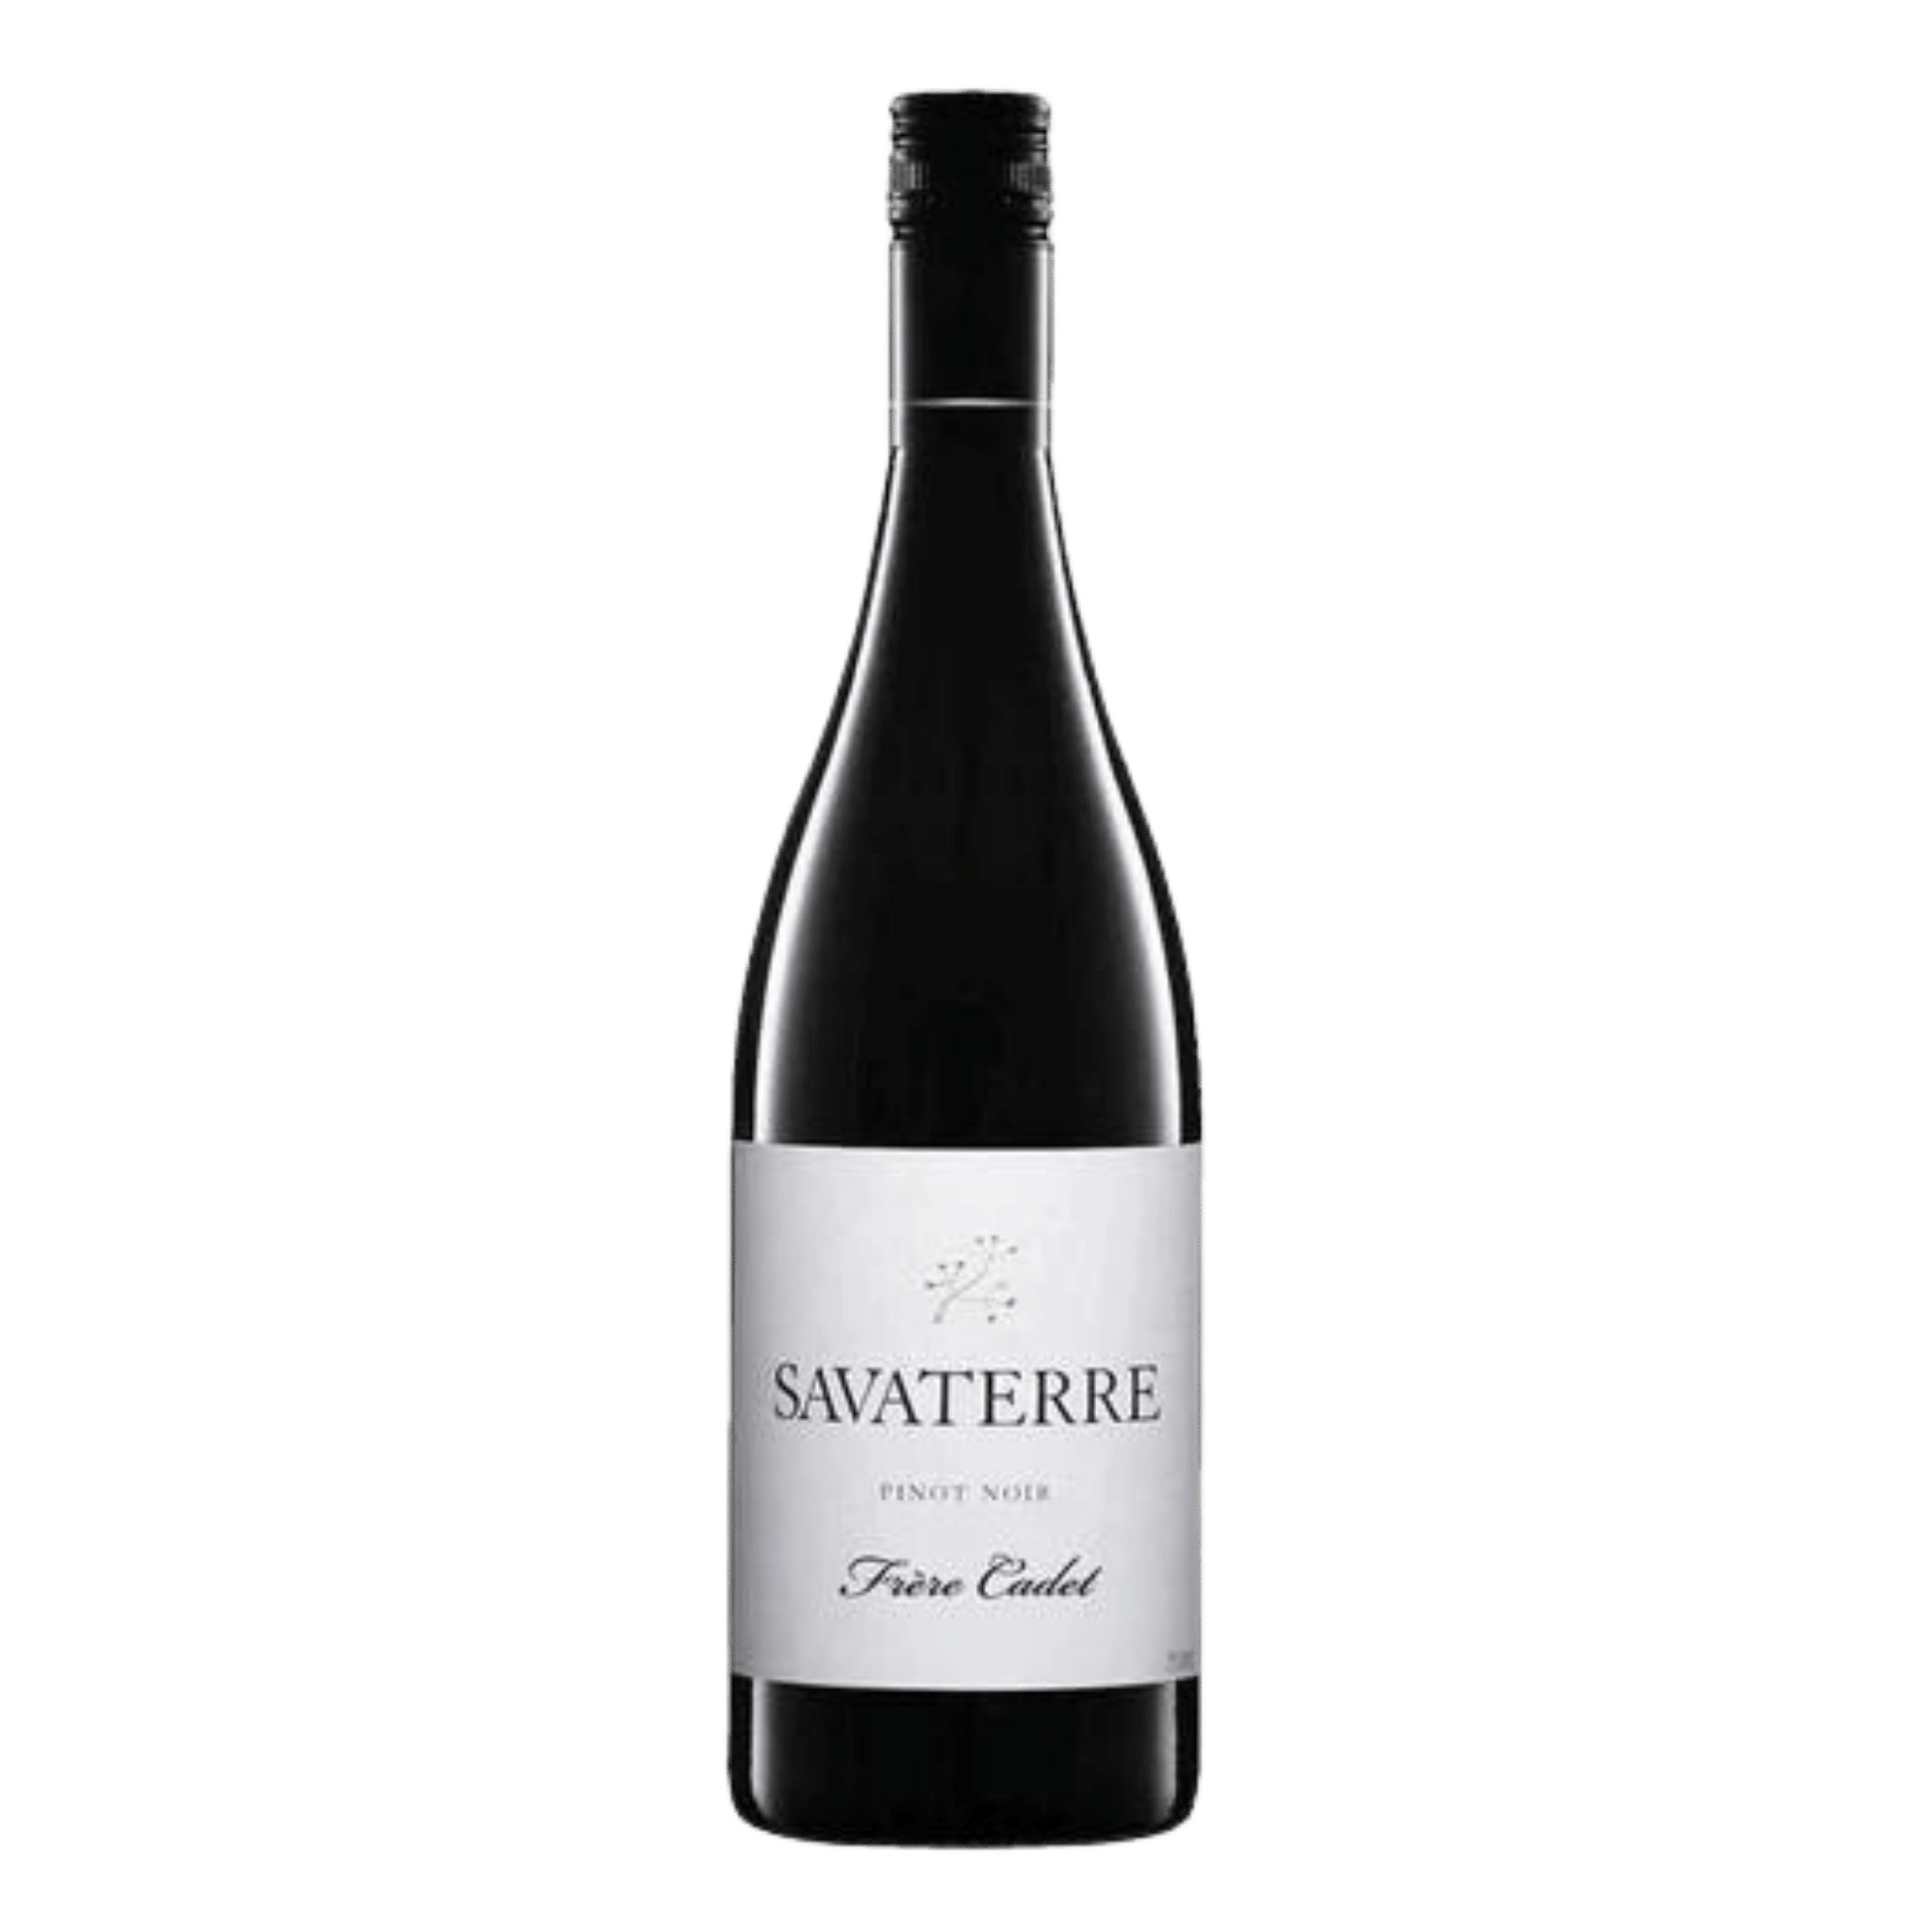 Savaterre 'Frere Cadet' Pinot Noir 2021